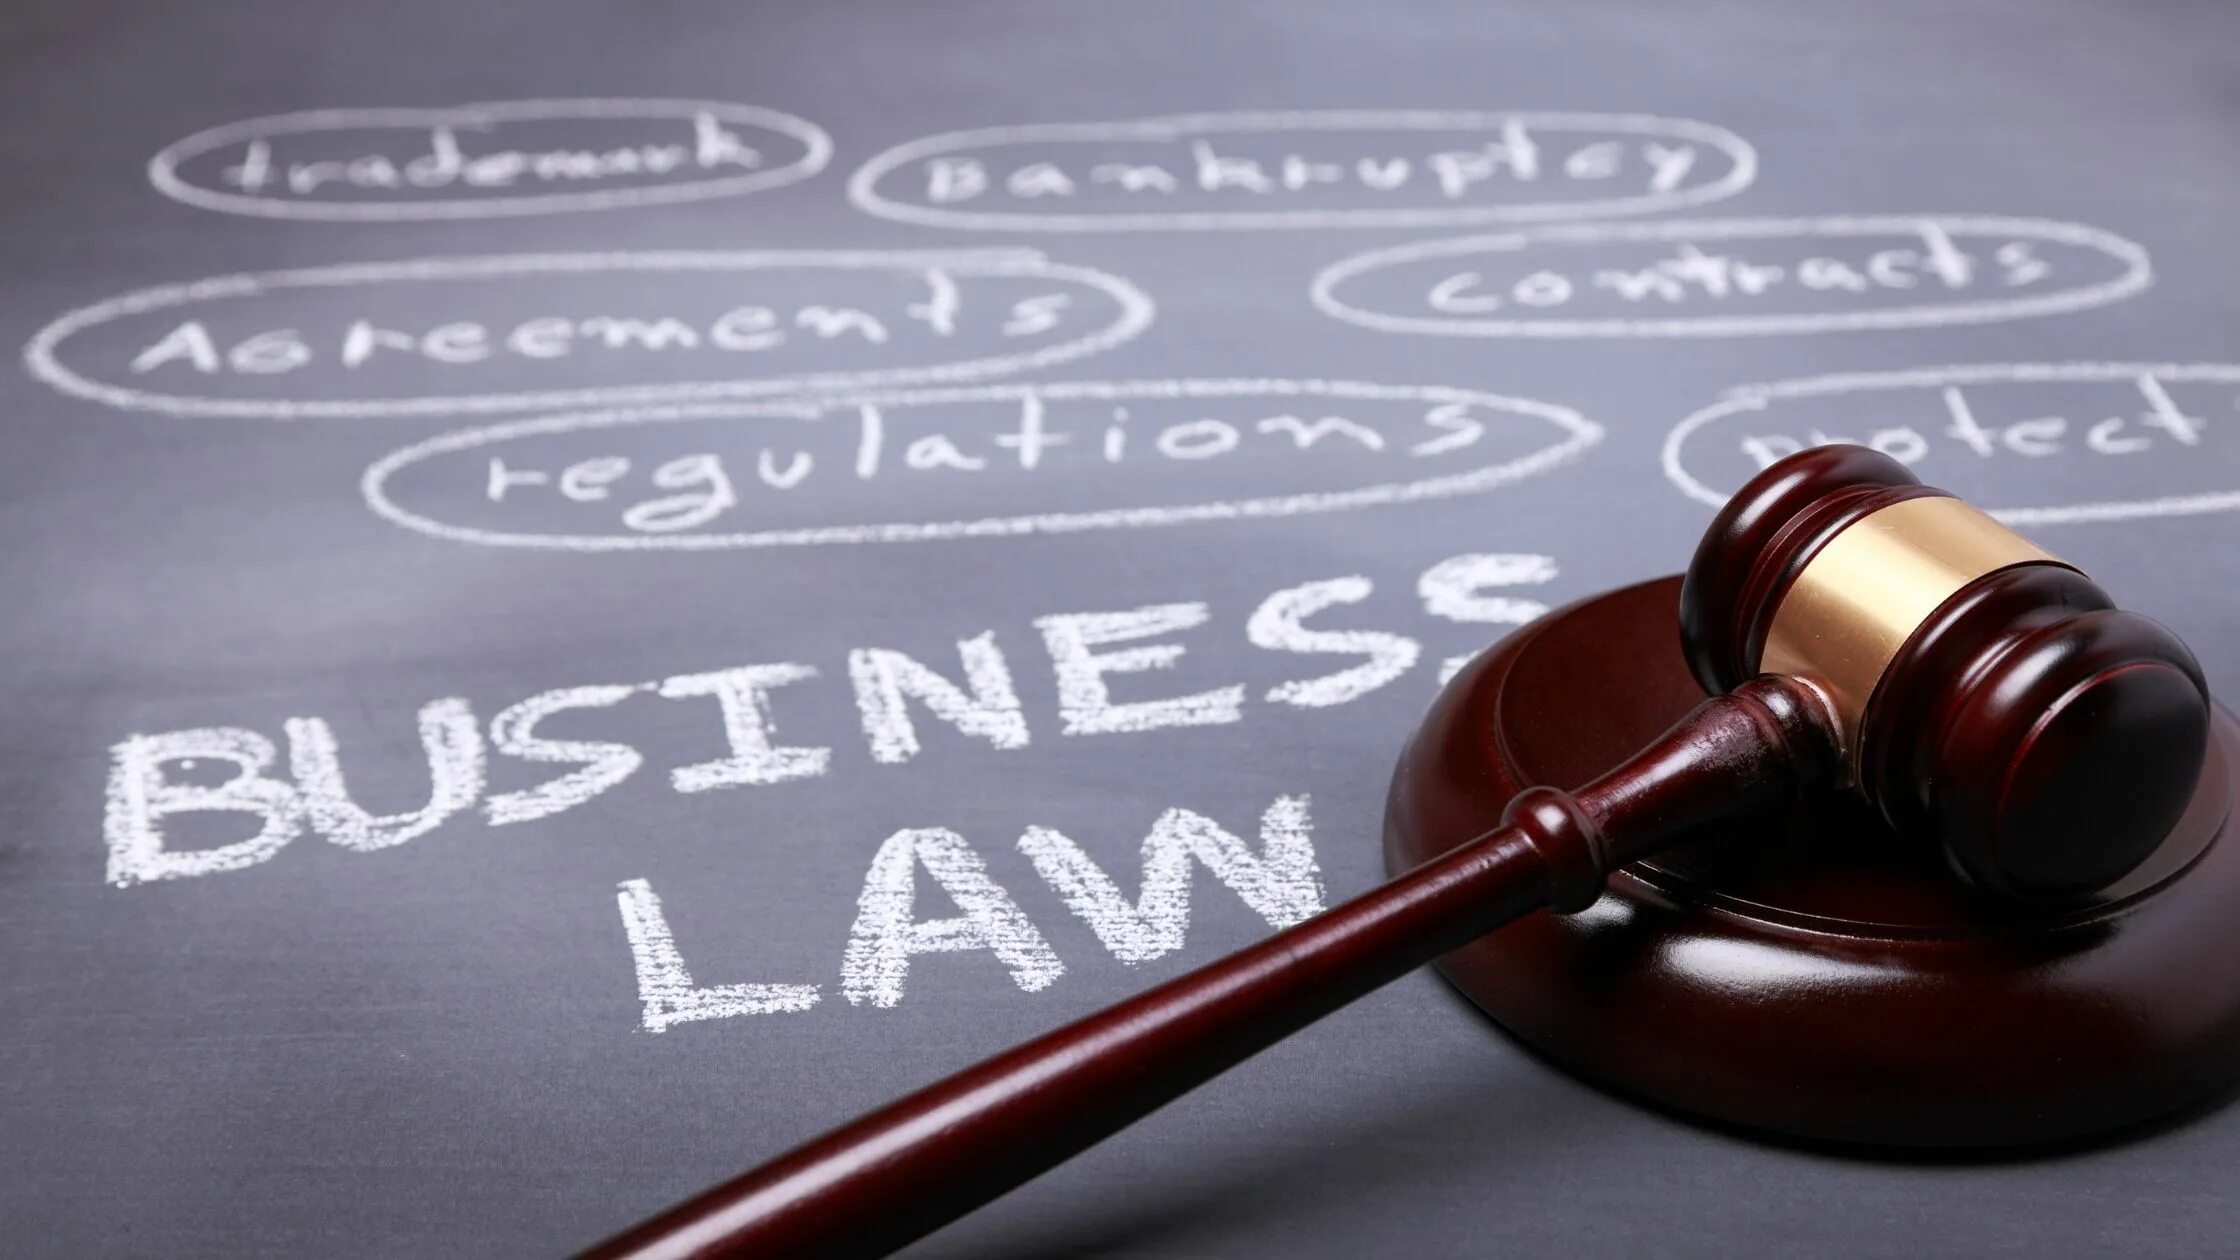 Business Law. Biznes Law. Правовая помощь бизнесу. Business Law subject. Legal issues